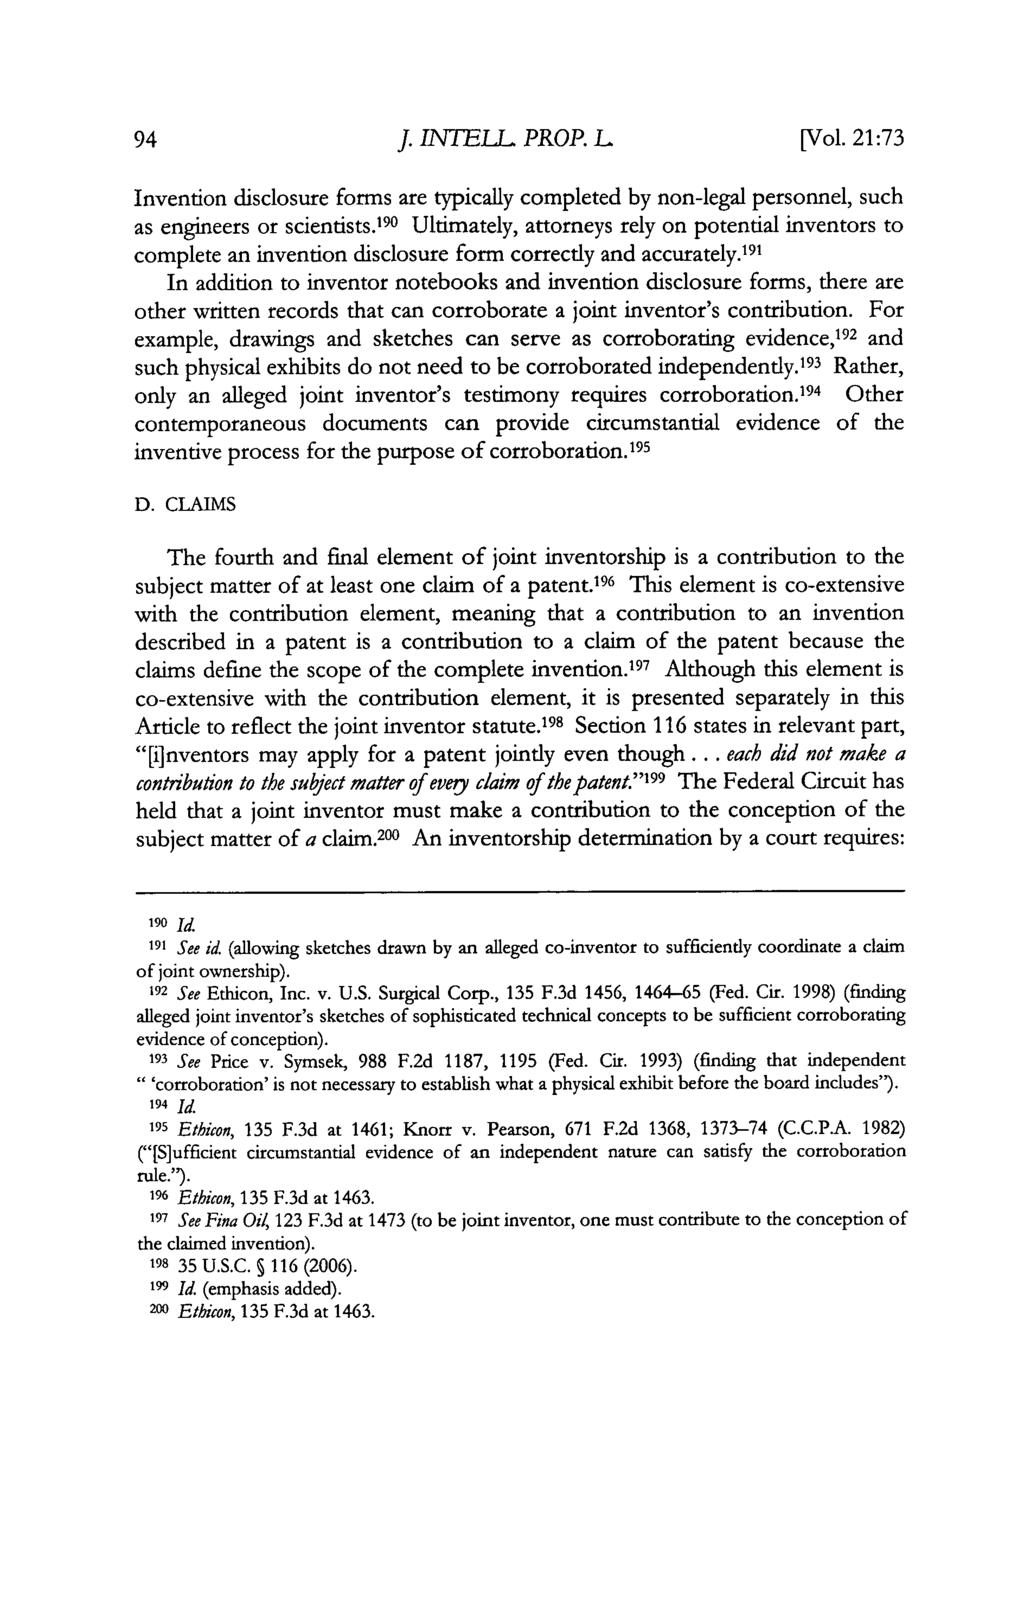 Journal of Intellectual Property Law, Vol. 21, Iss. 1 [2013], Art. 4 J. IN\TELL PROP. L [Vol.